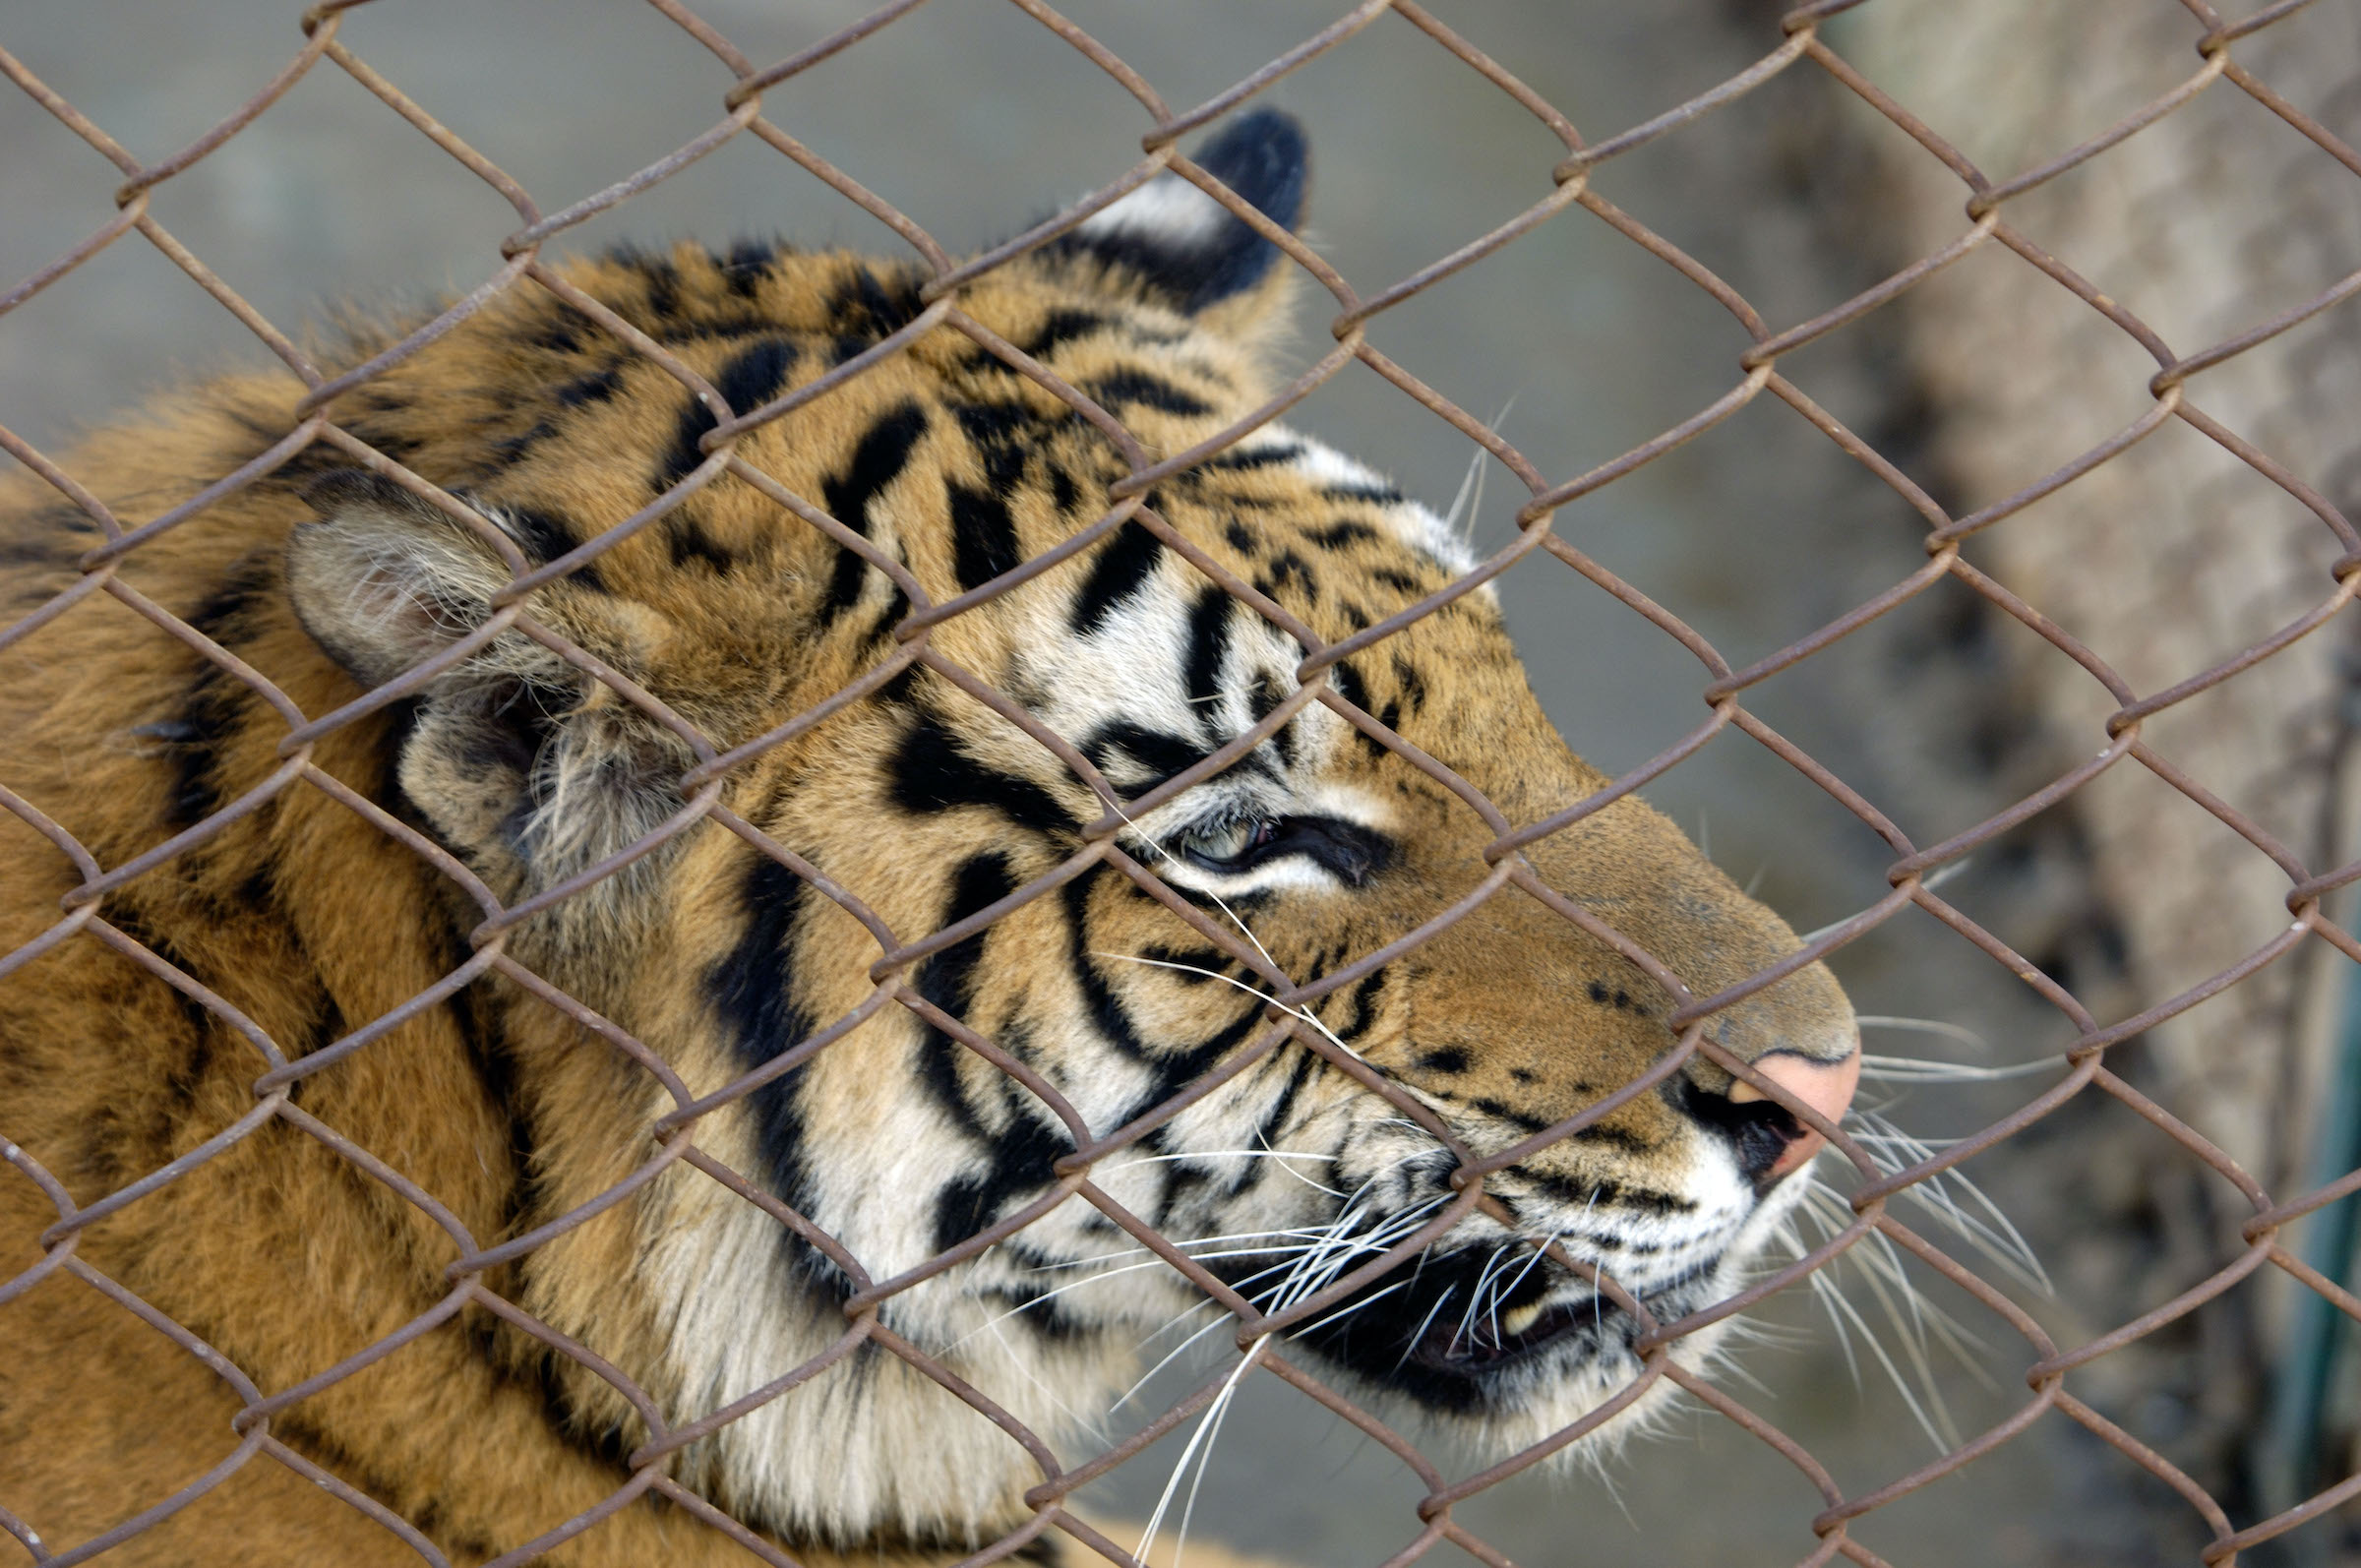 Not endangered, White Tigers in danger